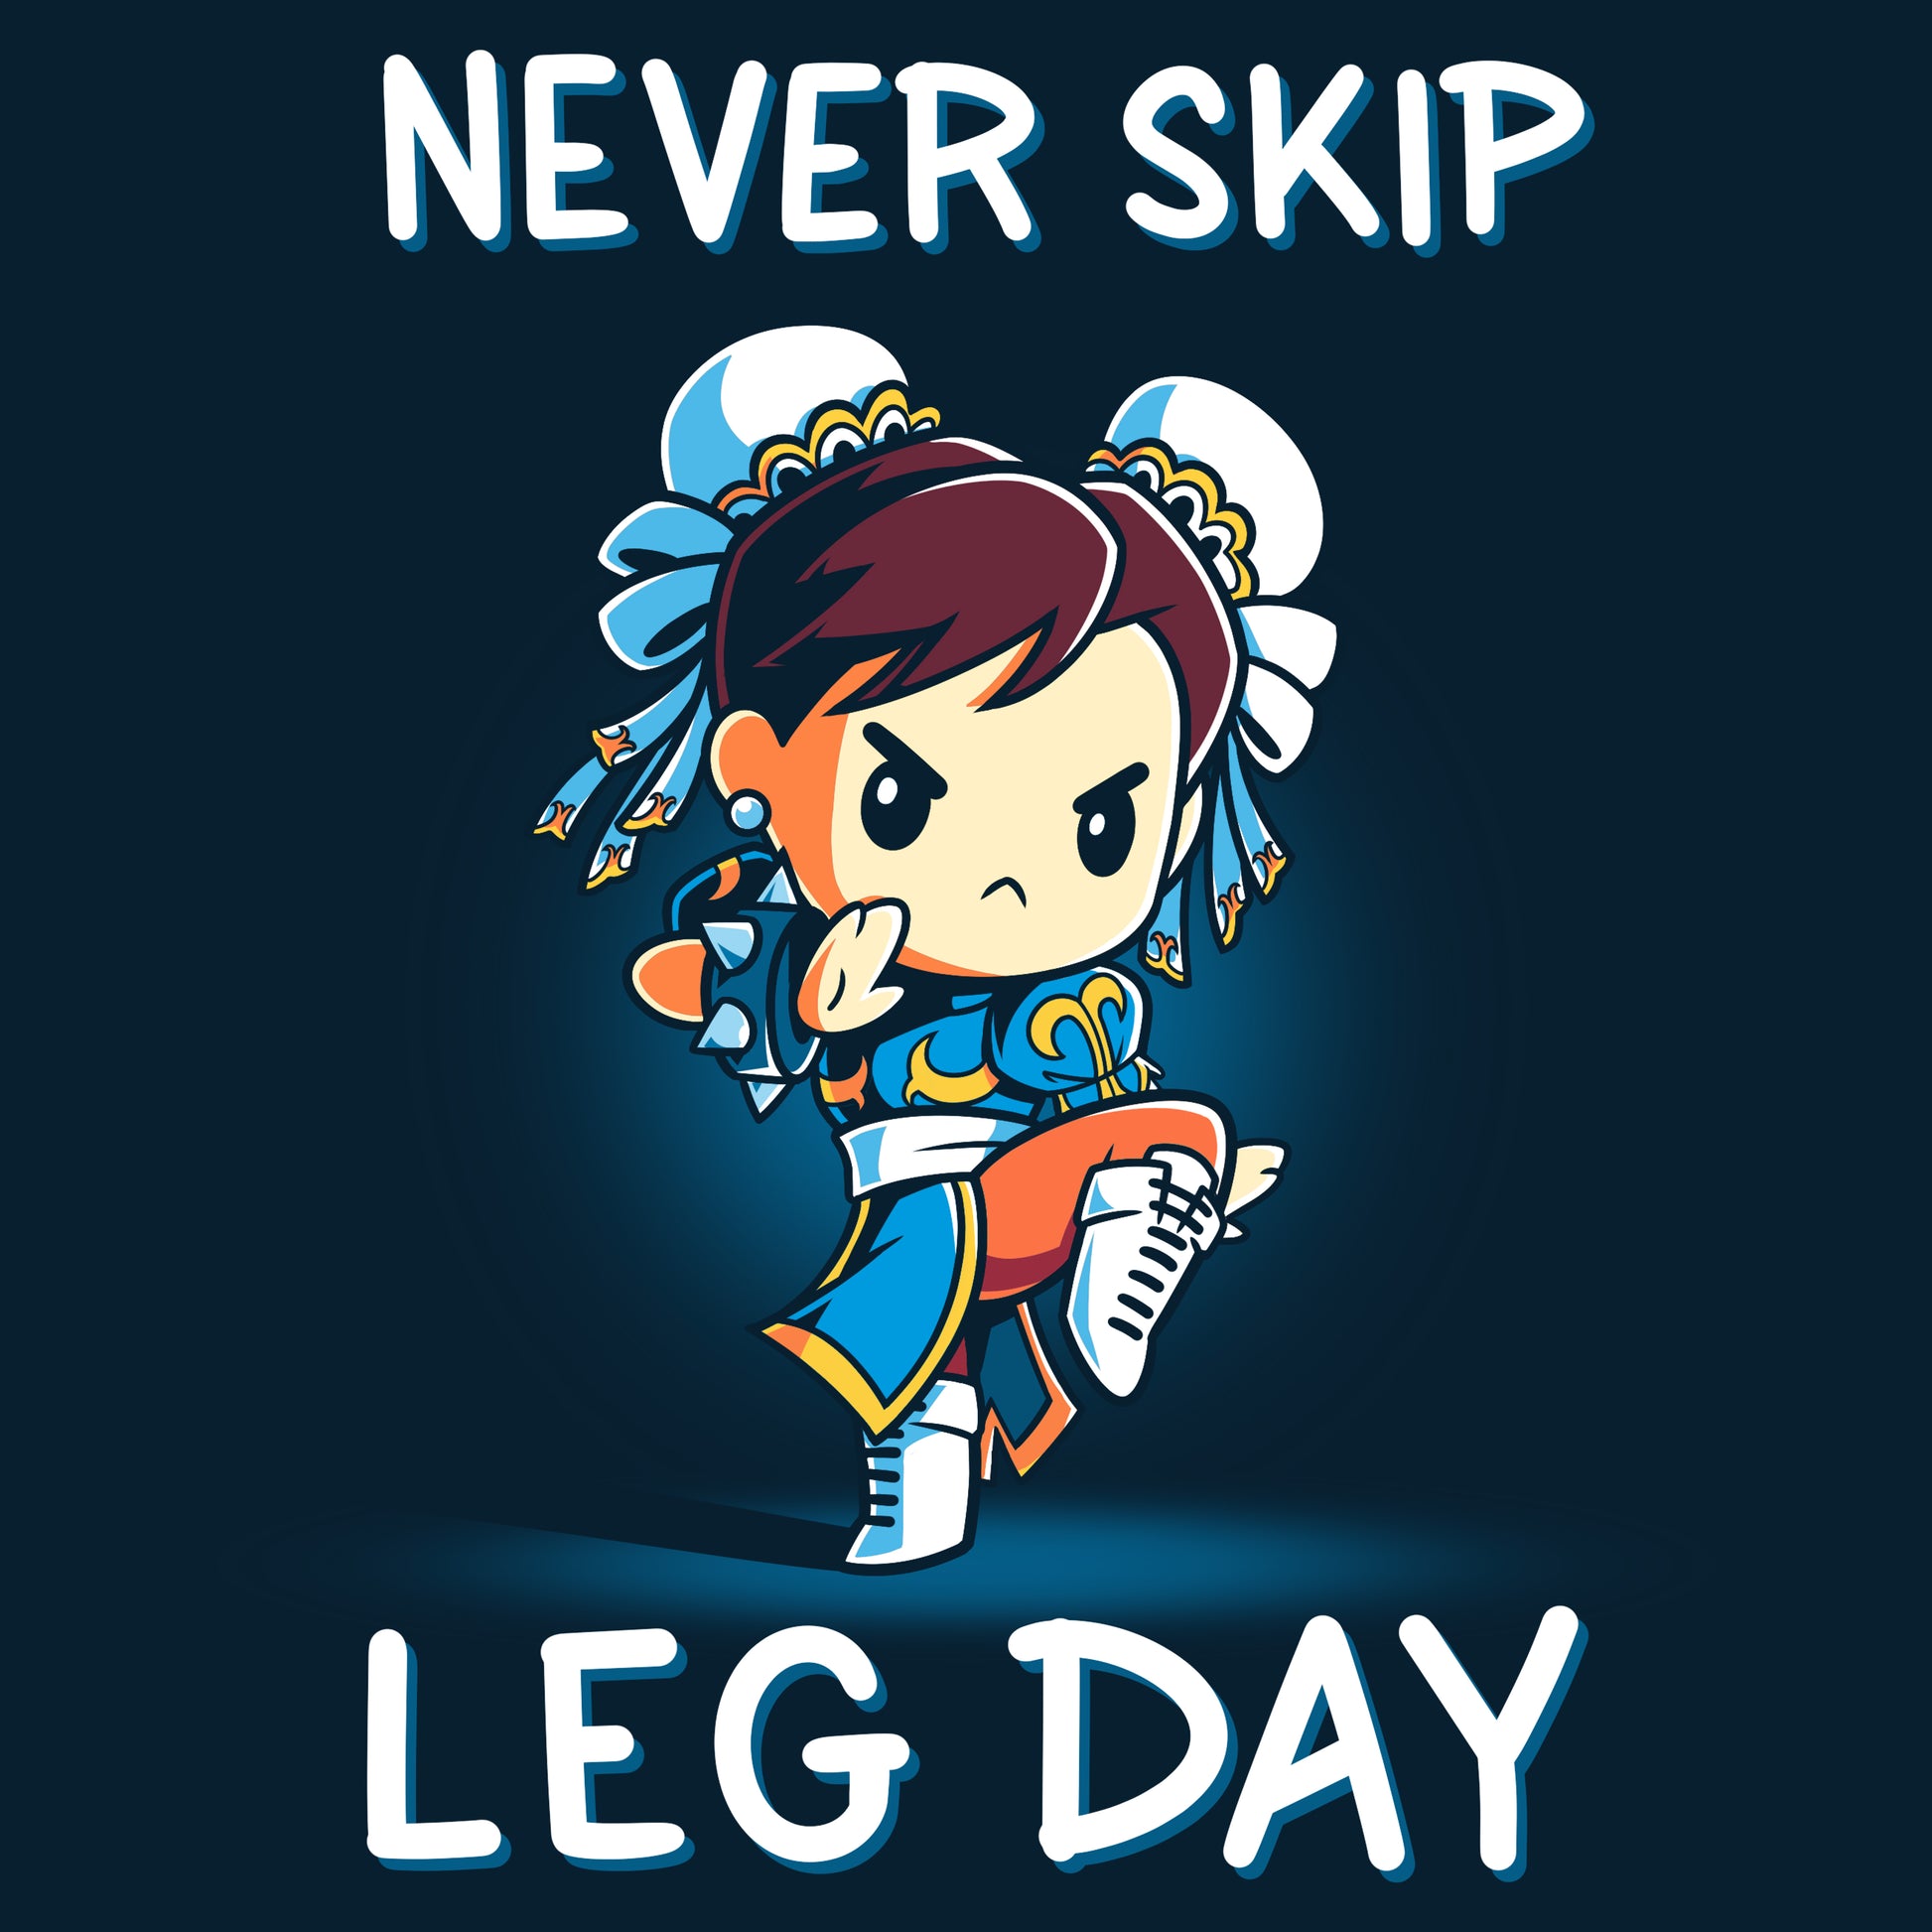 Officially licensed Never Skip Leg Day (Chun-Li) by Capcom.